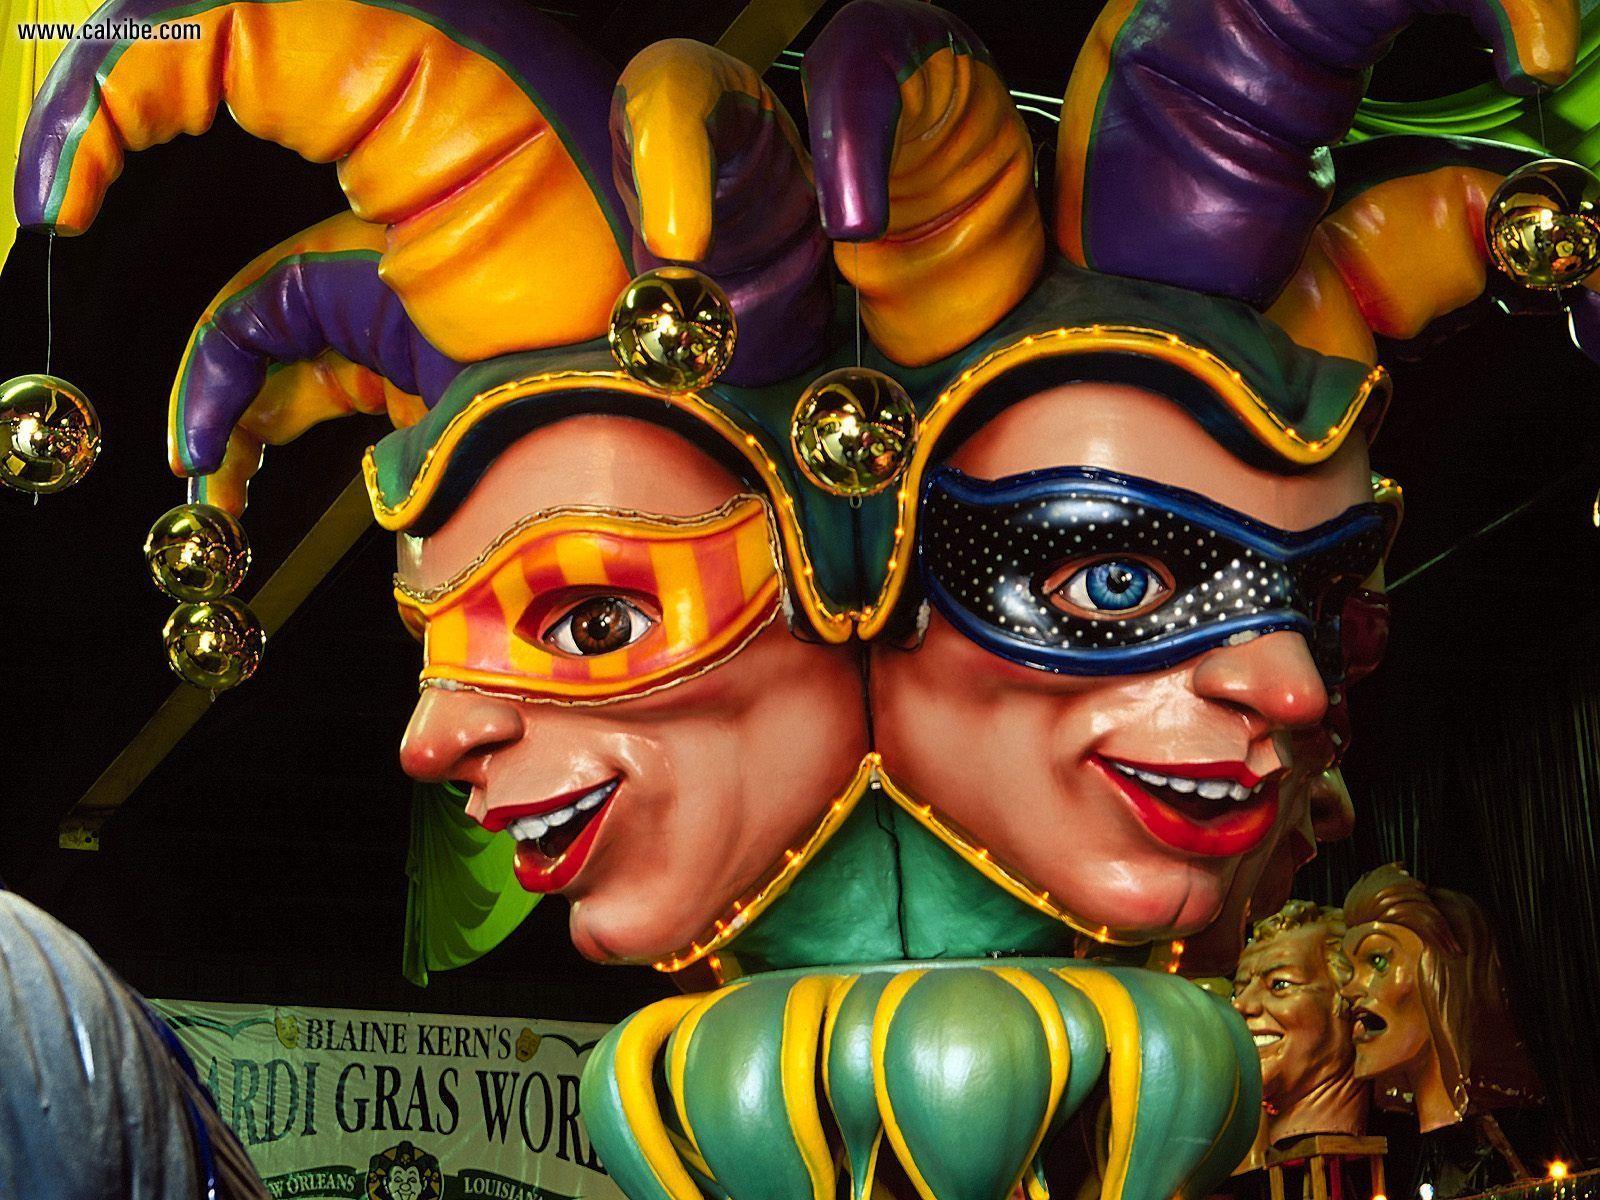 Known places: Blaine Kerns Mardi Gras World New Orleans Louisiana